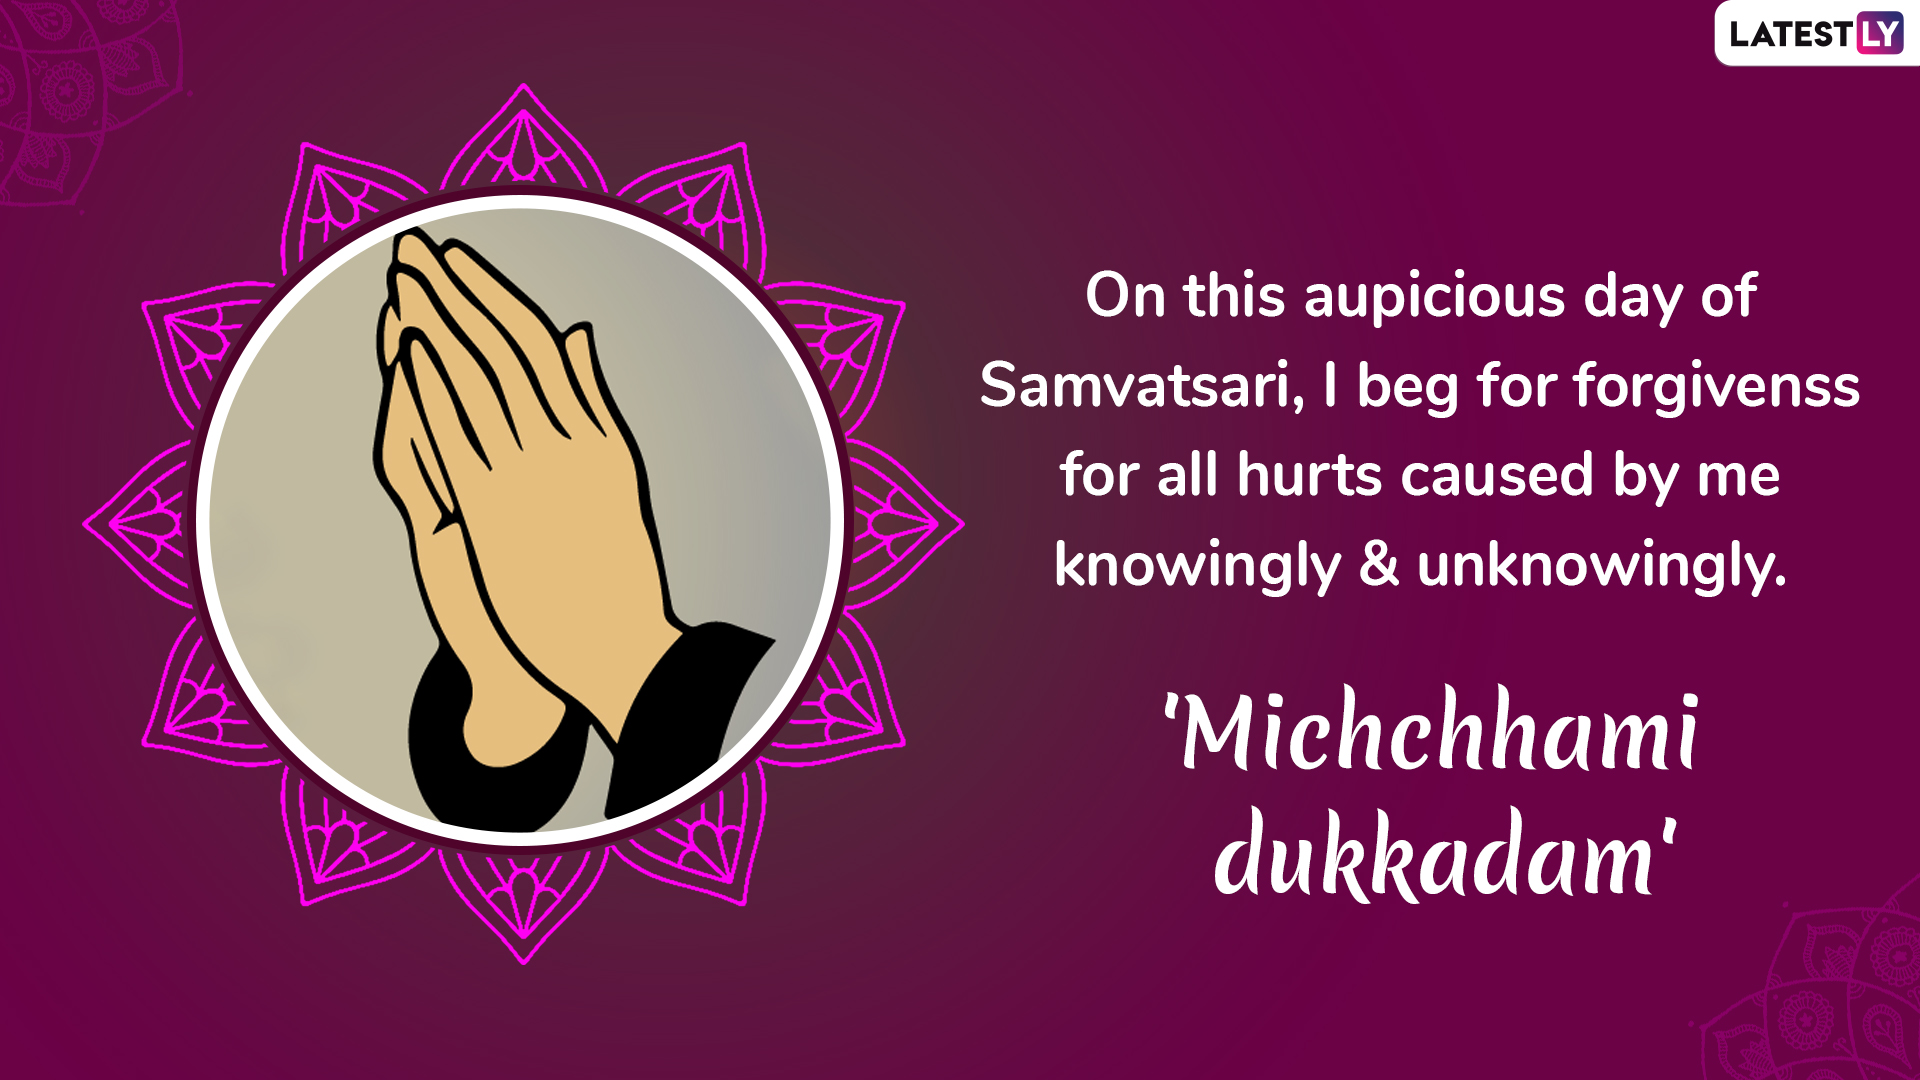 Samvatsari 2020 Quotes: Michhami Dukkadam WhatsApp Messages, Facebook  Status, Greetings And GIF Images to Seek Forgiveness This Paryushana | 🙏🏻  LatestLY